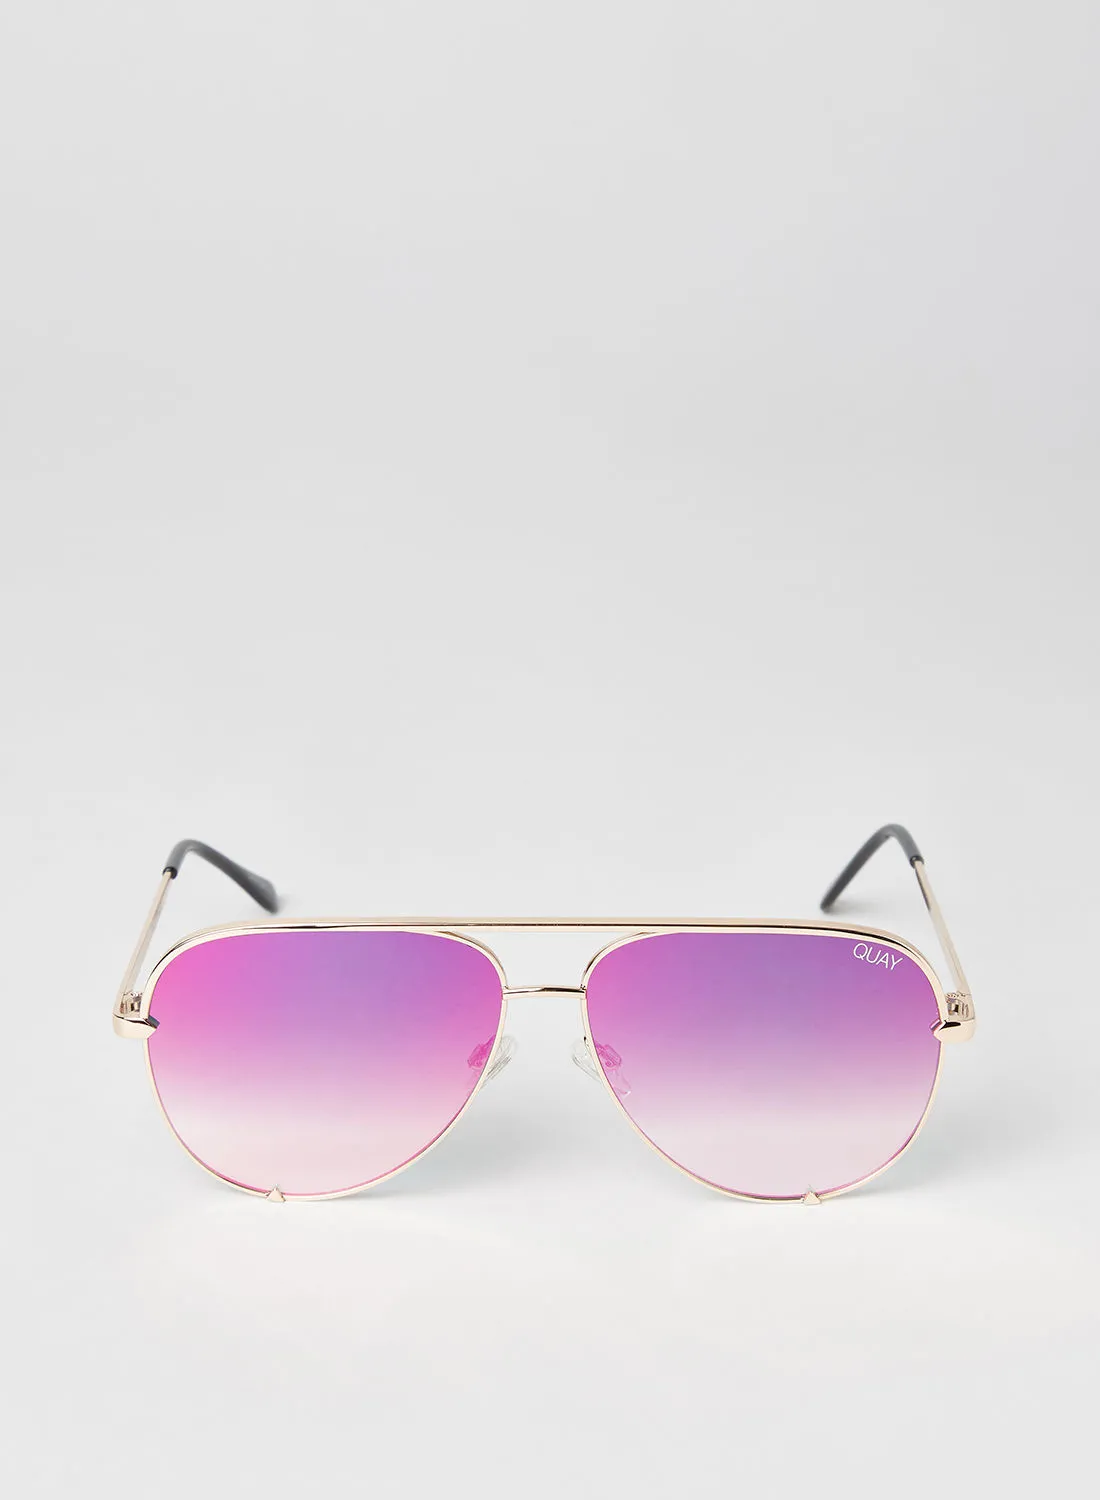 Quay Women's High Key Aviator Sunglasses